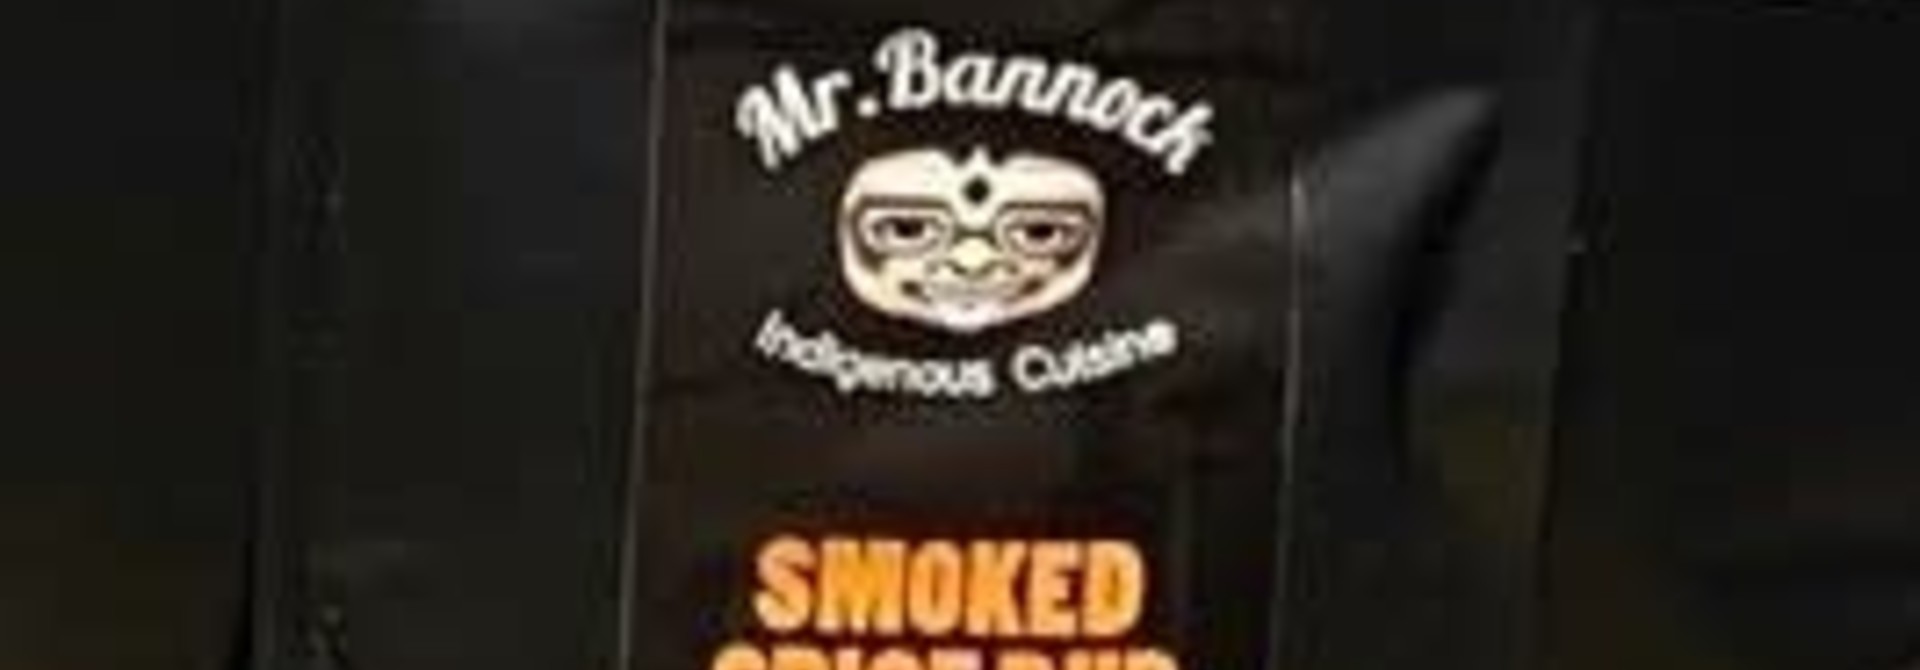 Mr Bannock Smoke Spice Mix 44g